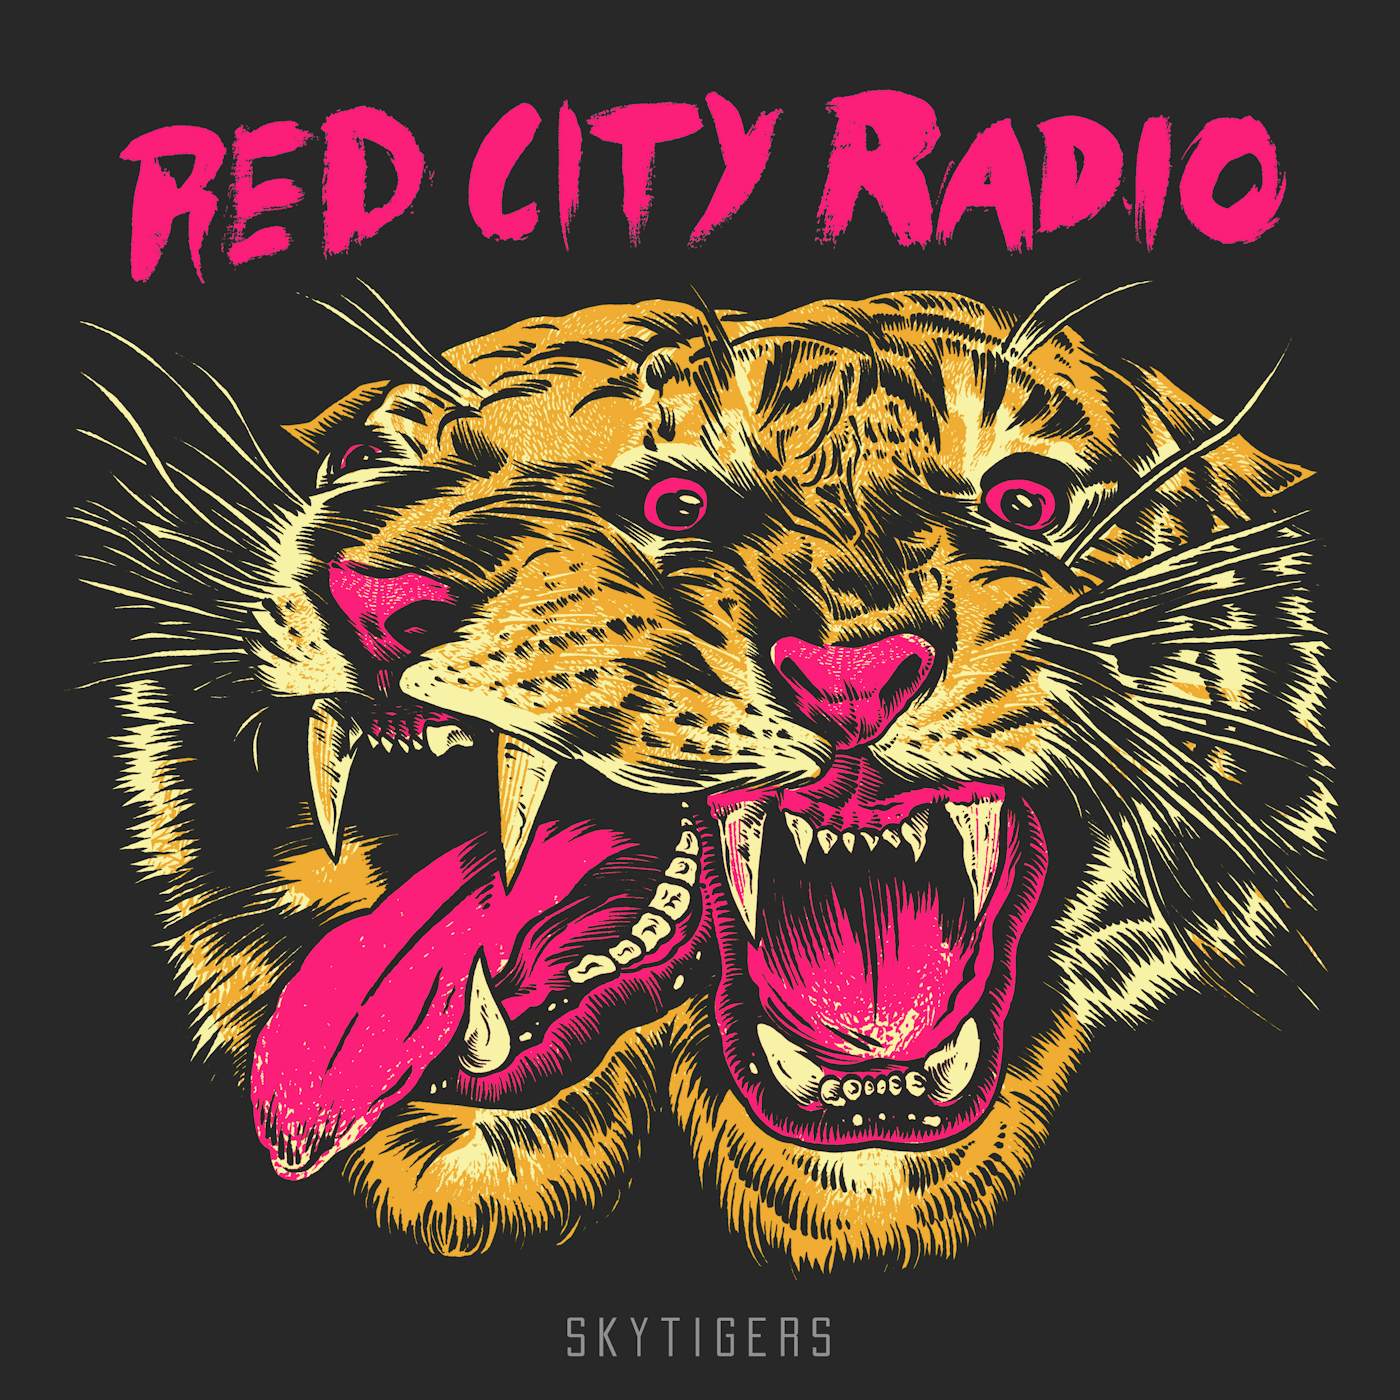 Red City Radio SkyTigers Vinyl Record